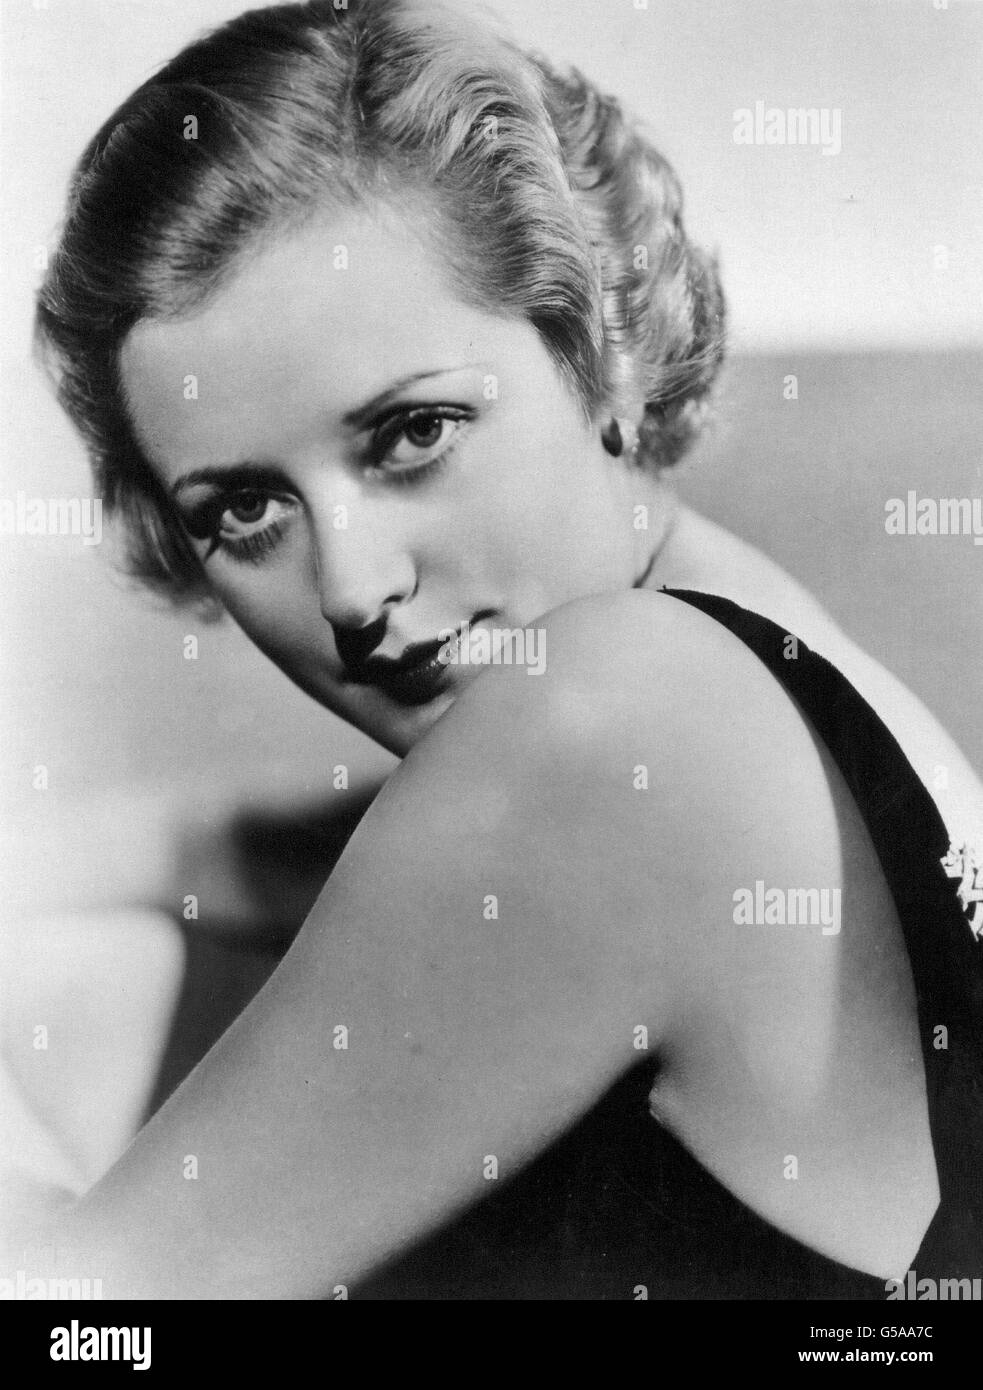 Evelyn Waye - 1936. Theater- und Musikfilmschauspielerin Evelyn Saye. Stockfoto